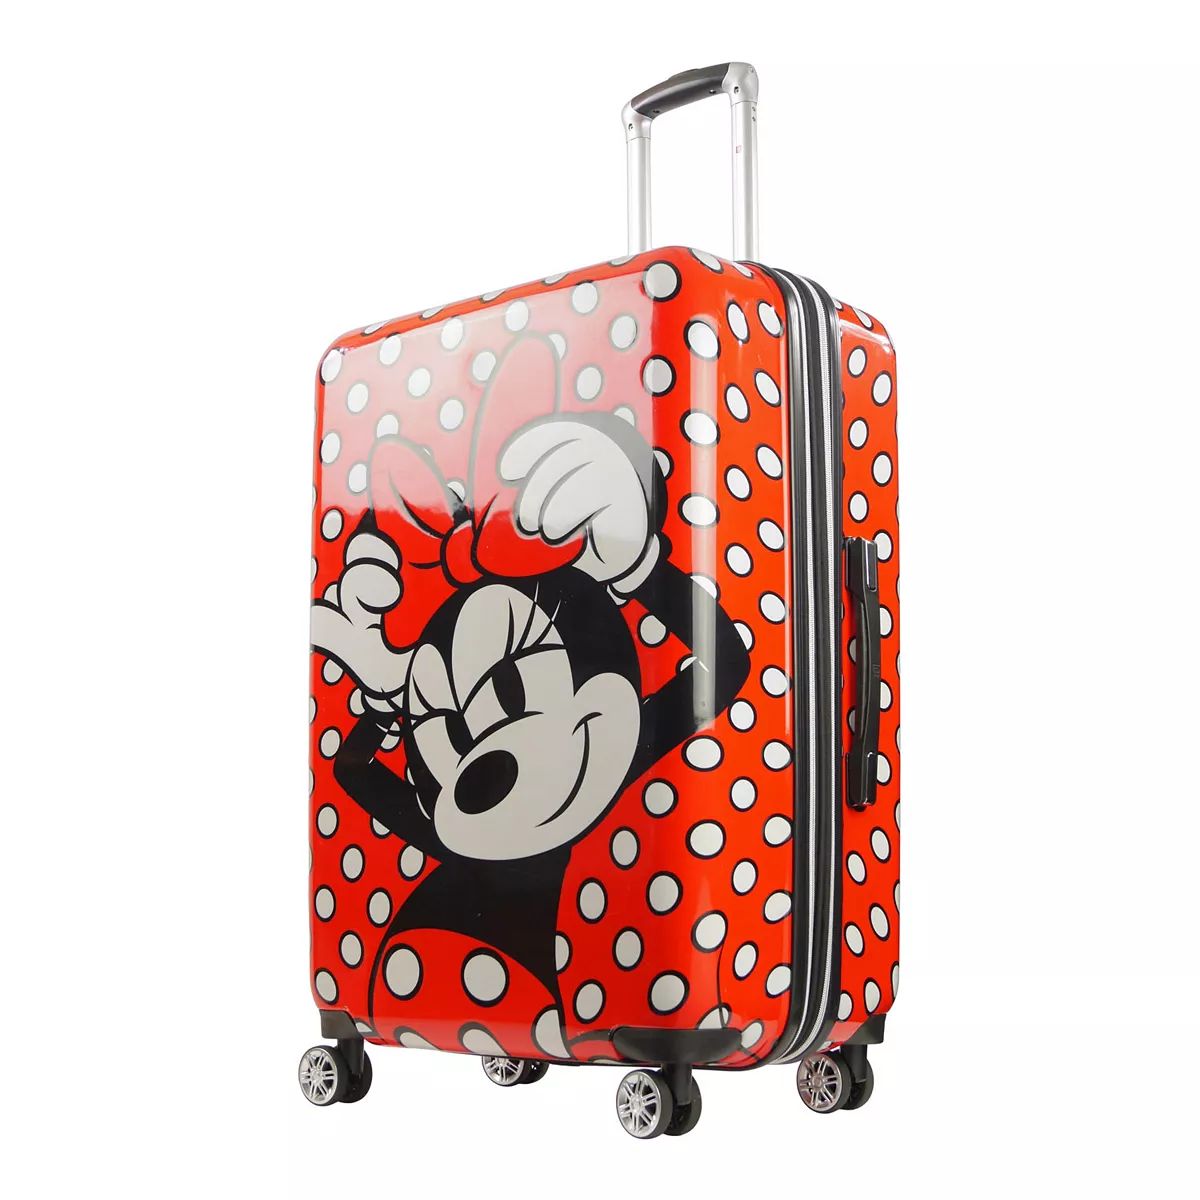 Ful Disney's Minnie Mouse Printed Polka Dot II Hardside Spinner Luggage | Kohl's